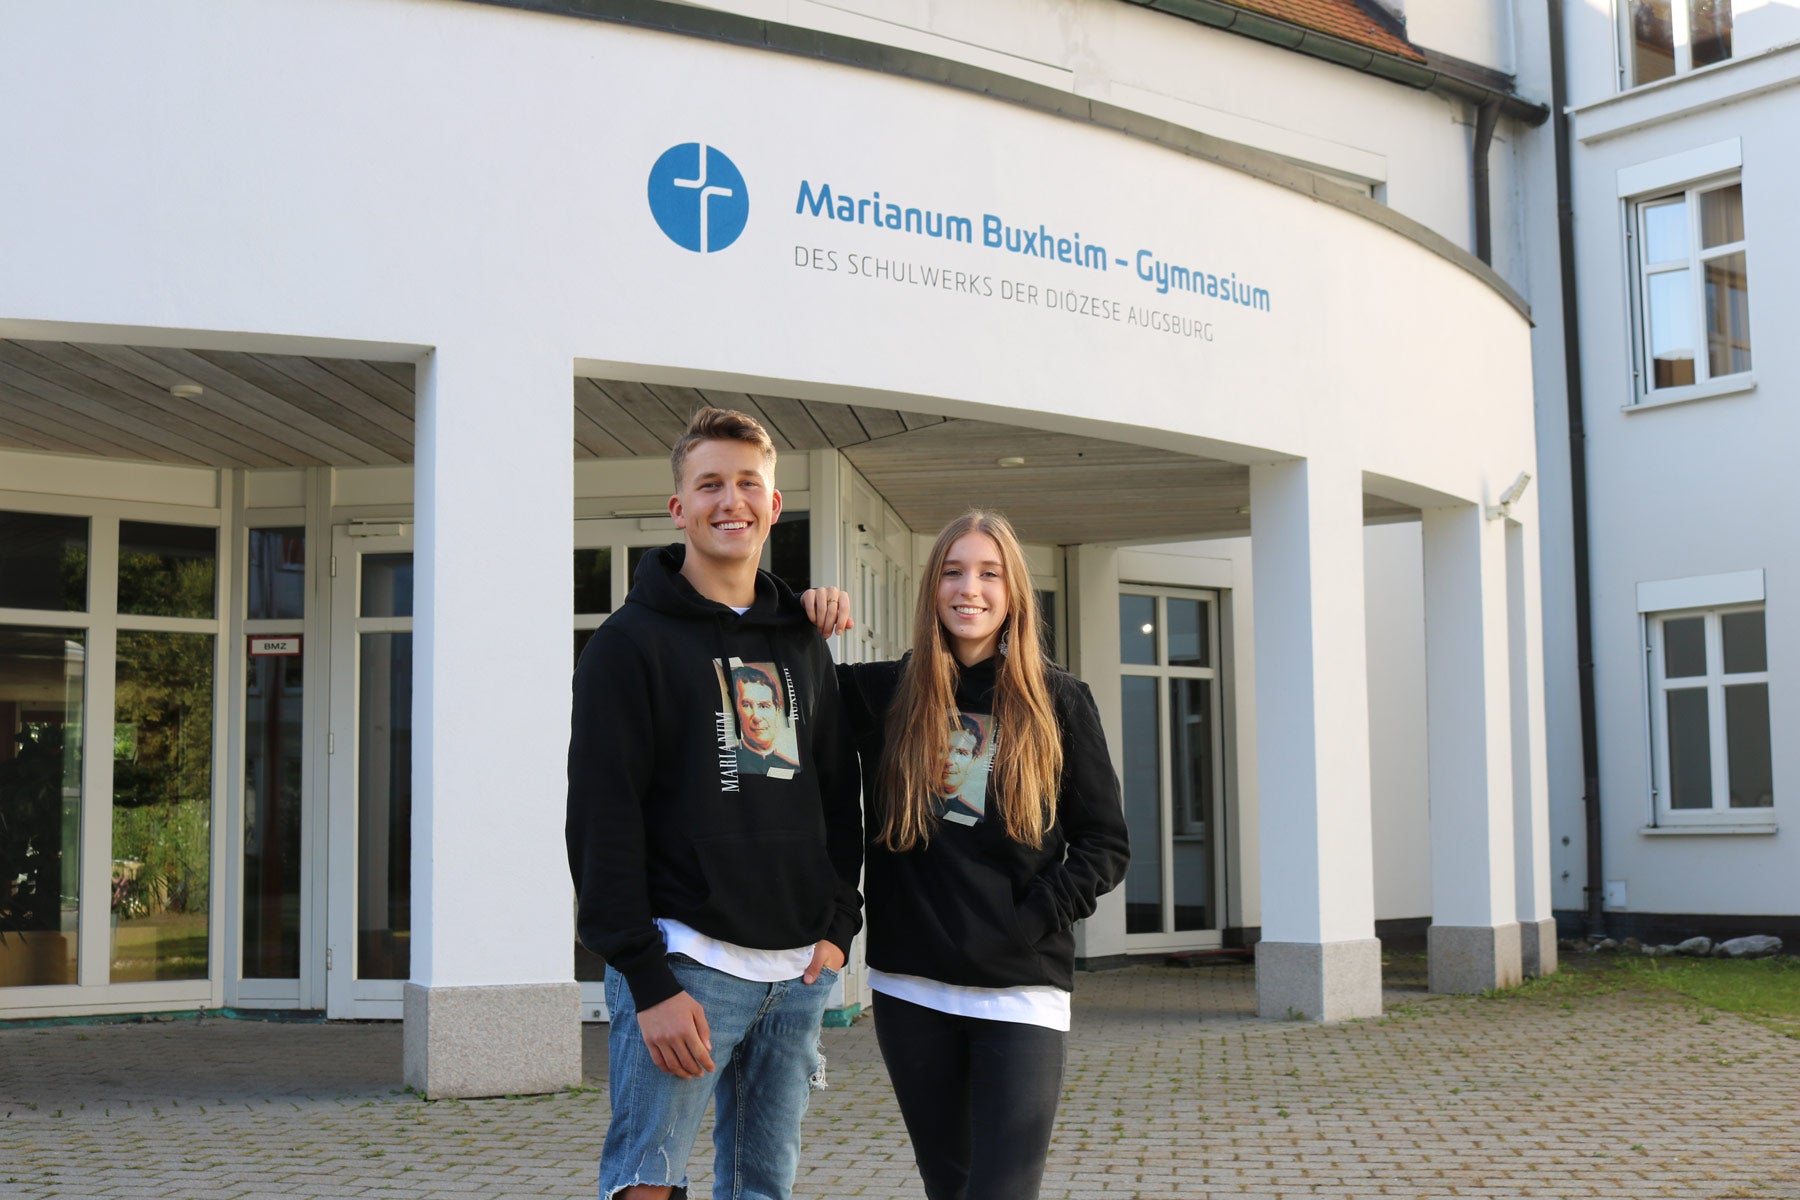 Gymnasium Marianum Buxheim 2019/20